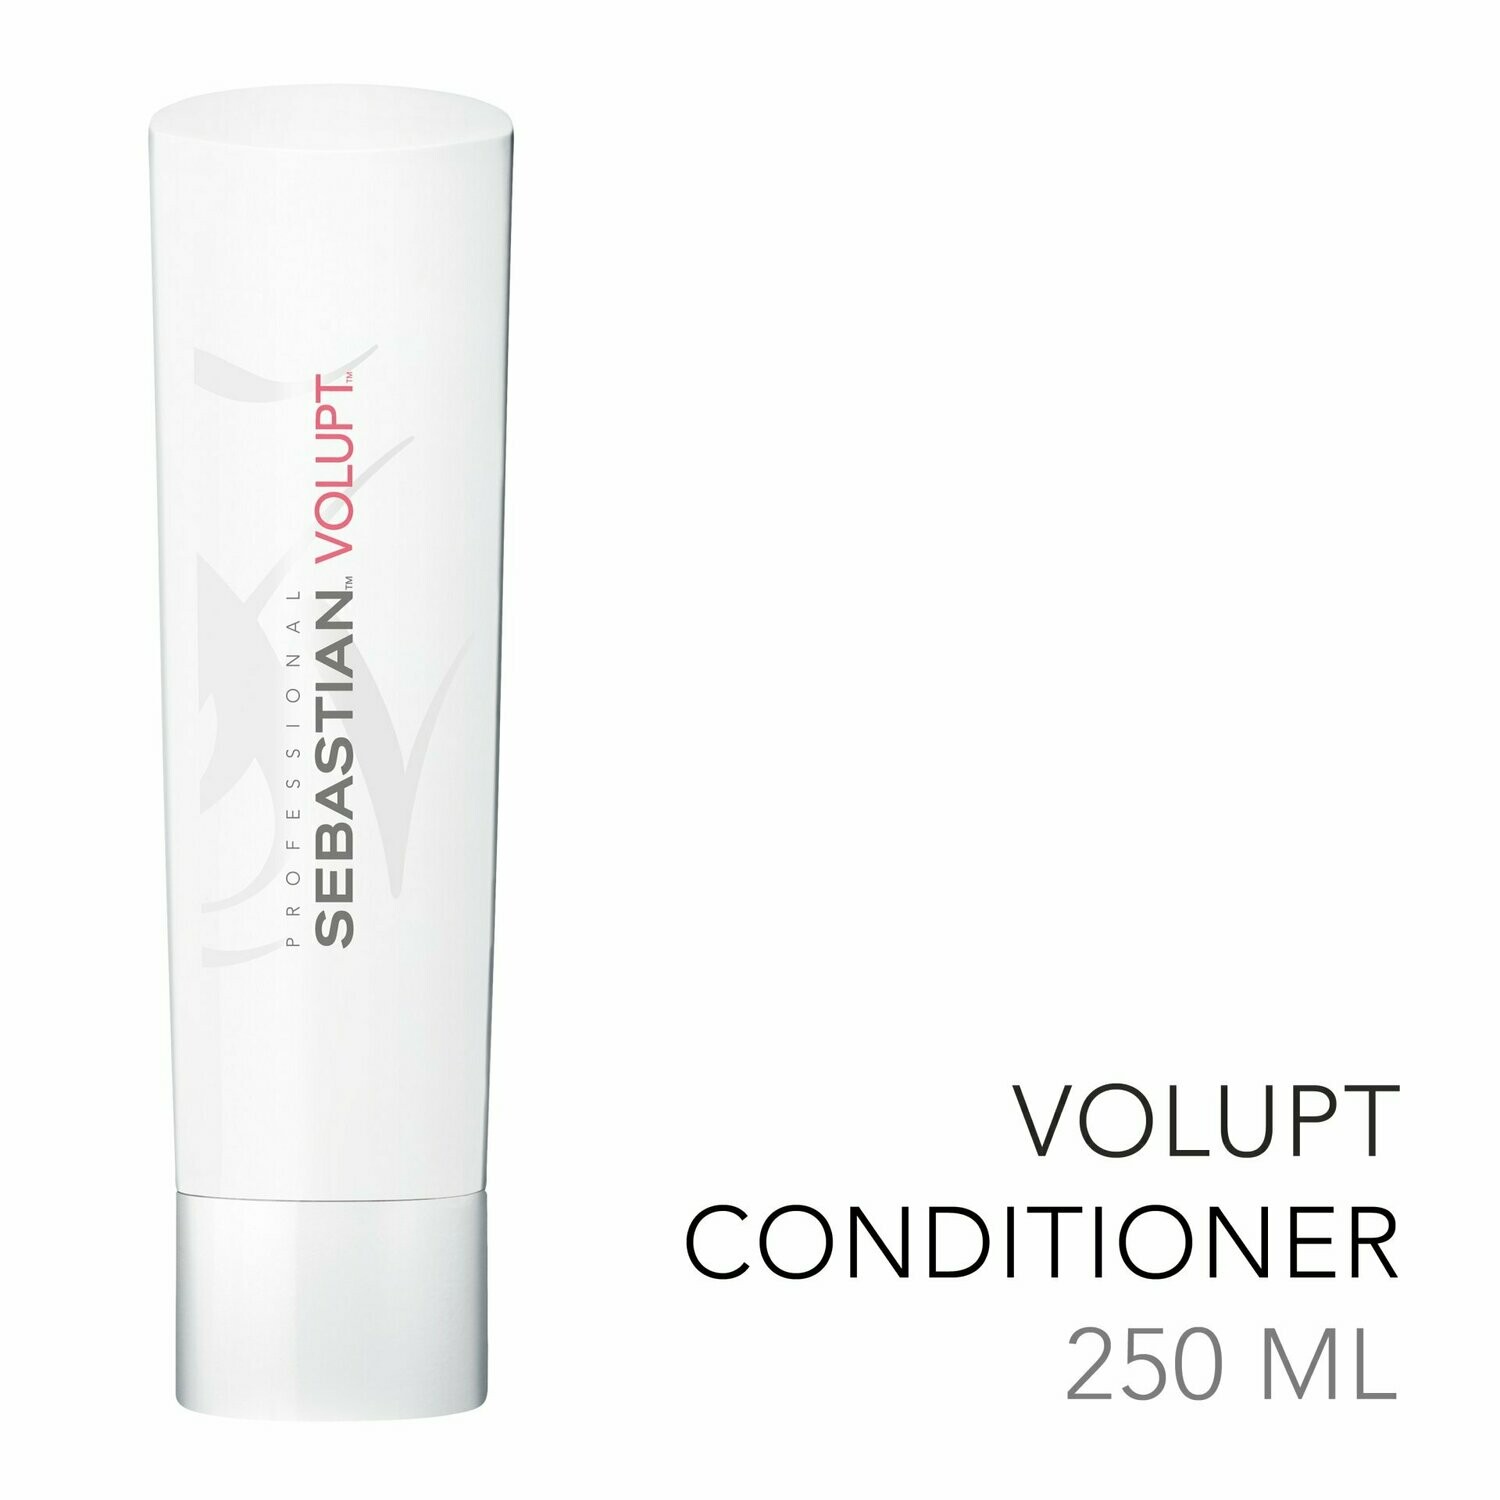 Sebastian Volupt Conditioner 250ml